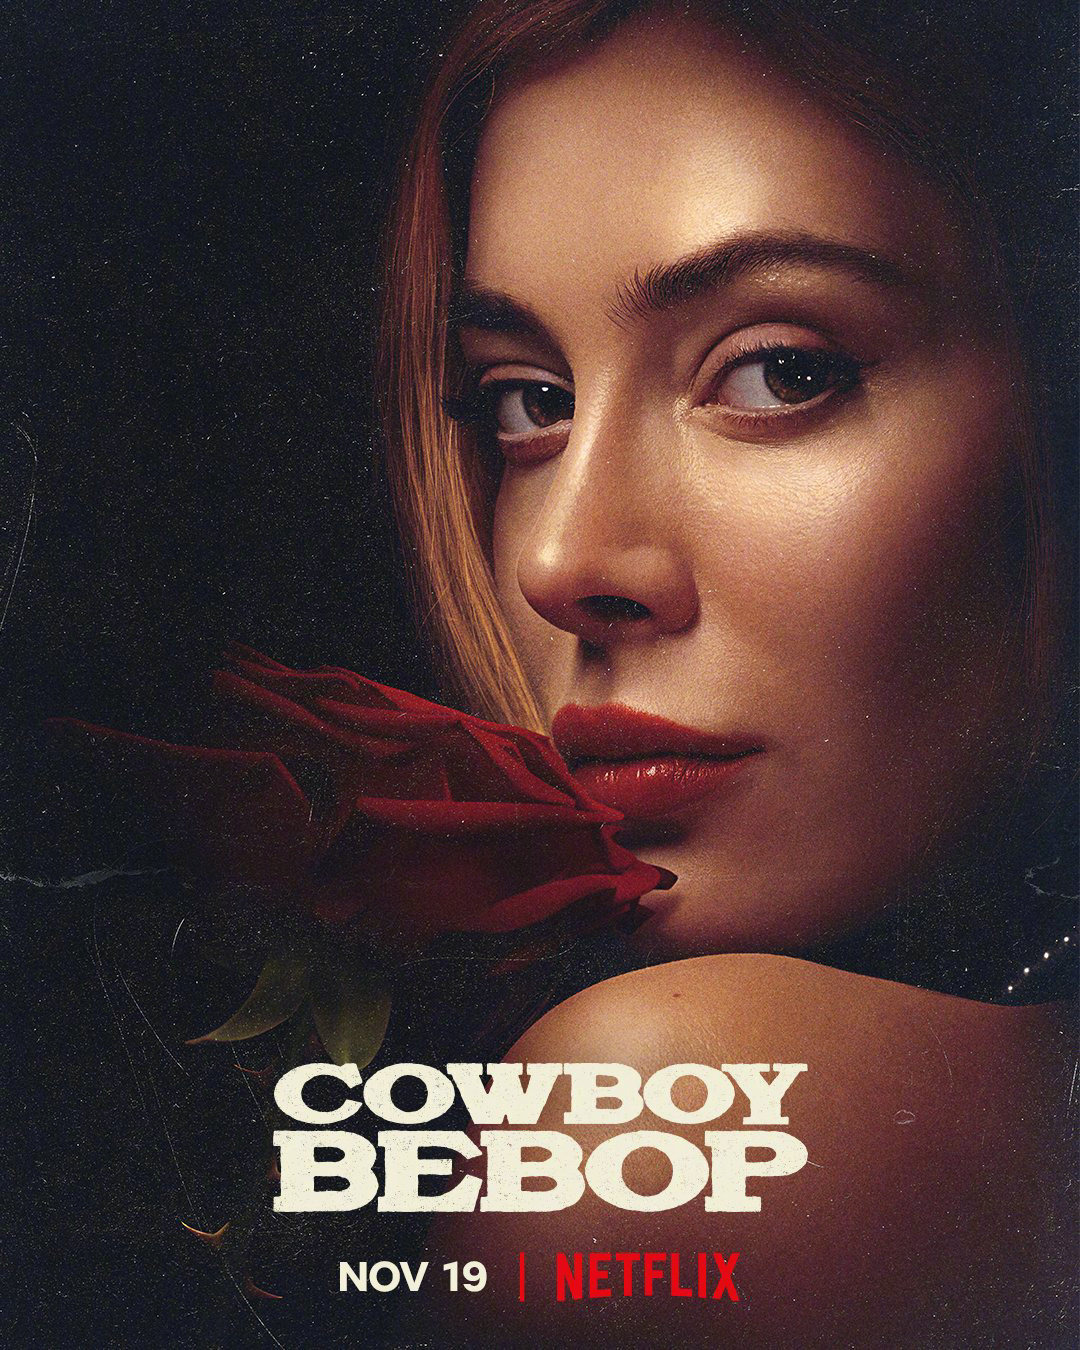 Extra Large TV Poster Image for Cowboy Bebop (#7 of 9)